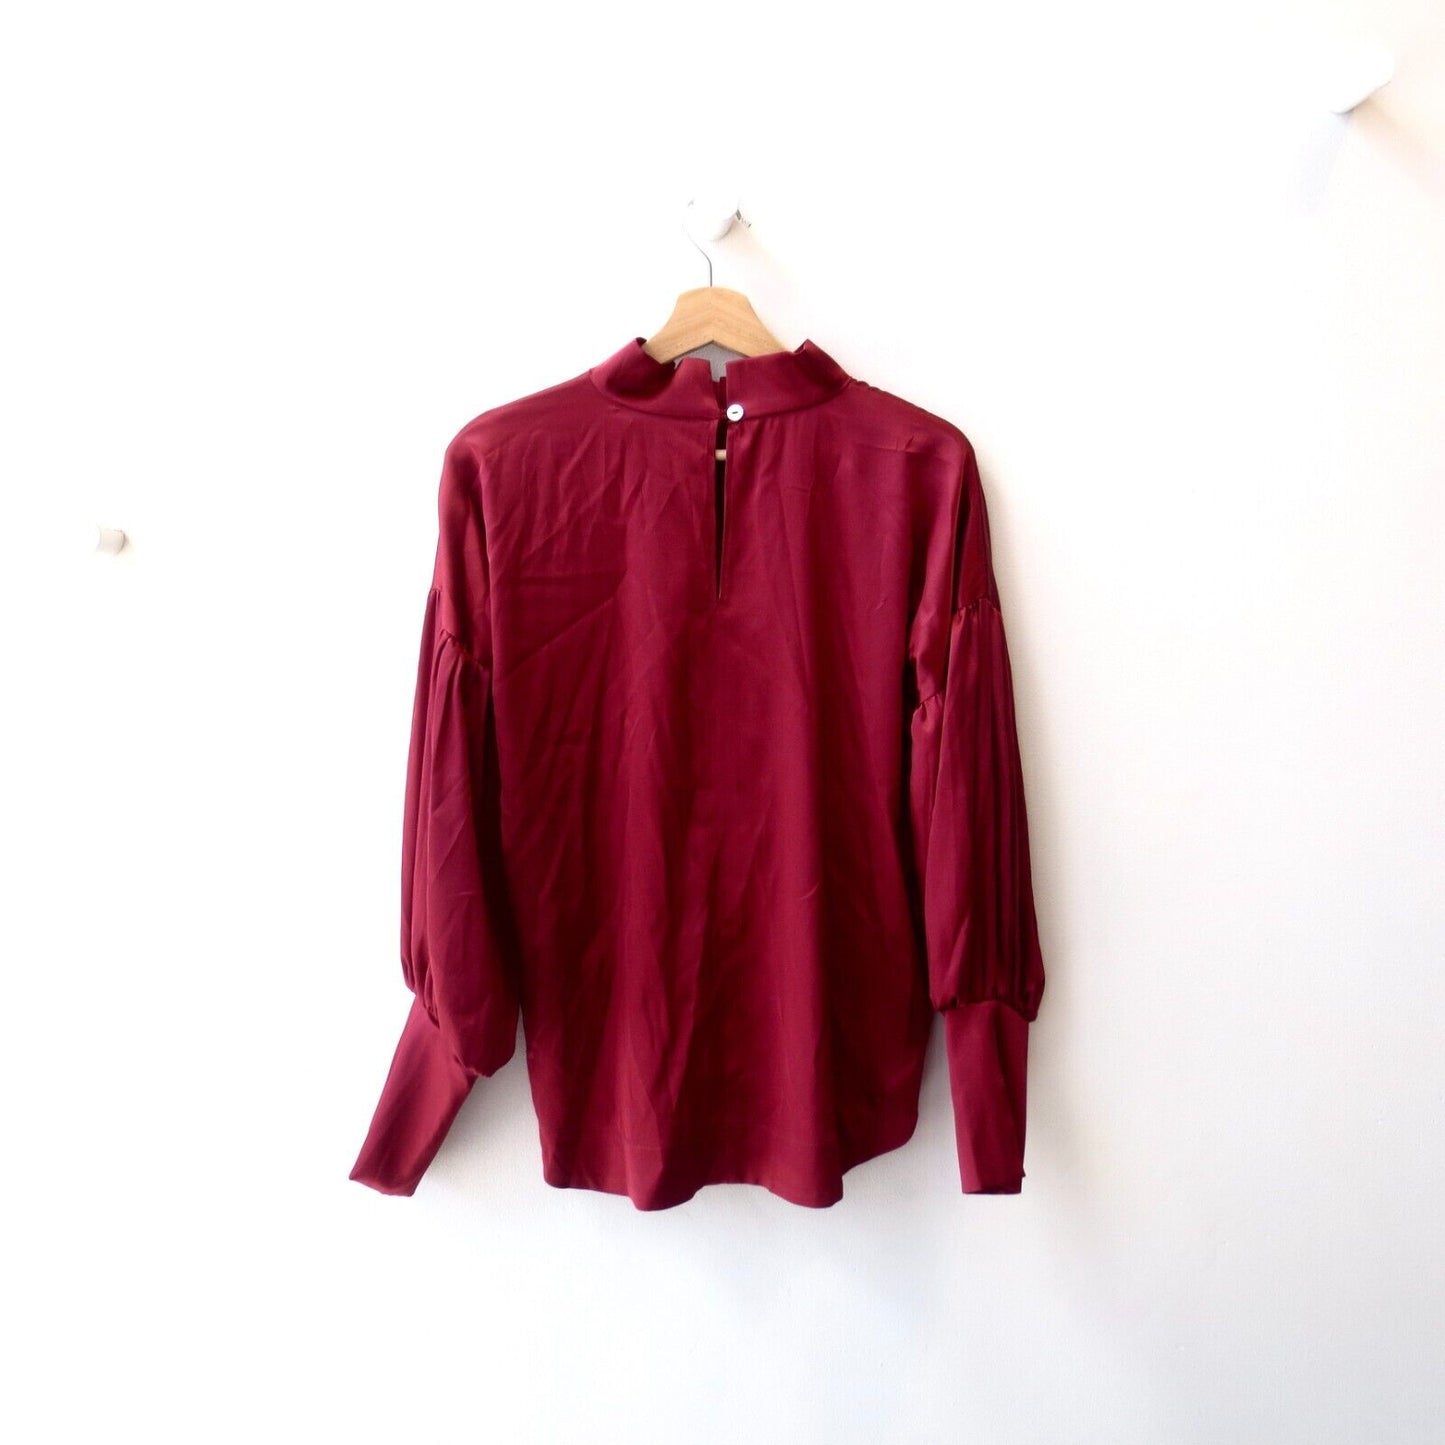 S - Monica Nera NEW $305 Wine Red Amy Silk Shirt Long Sleeve Blouse Top 4427SC